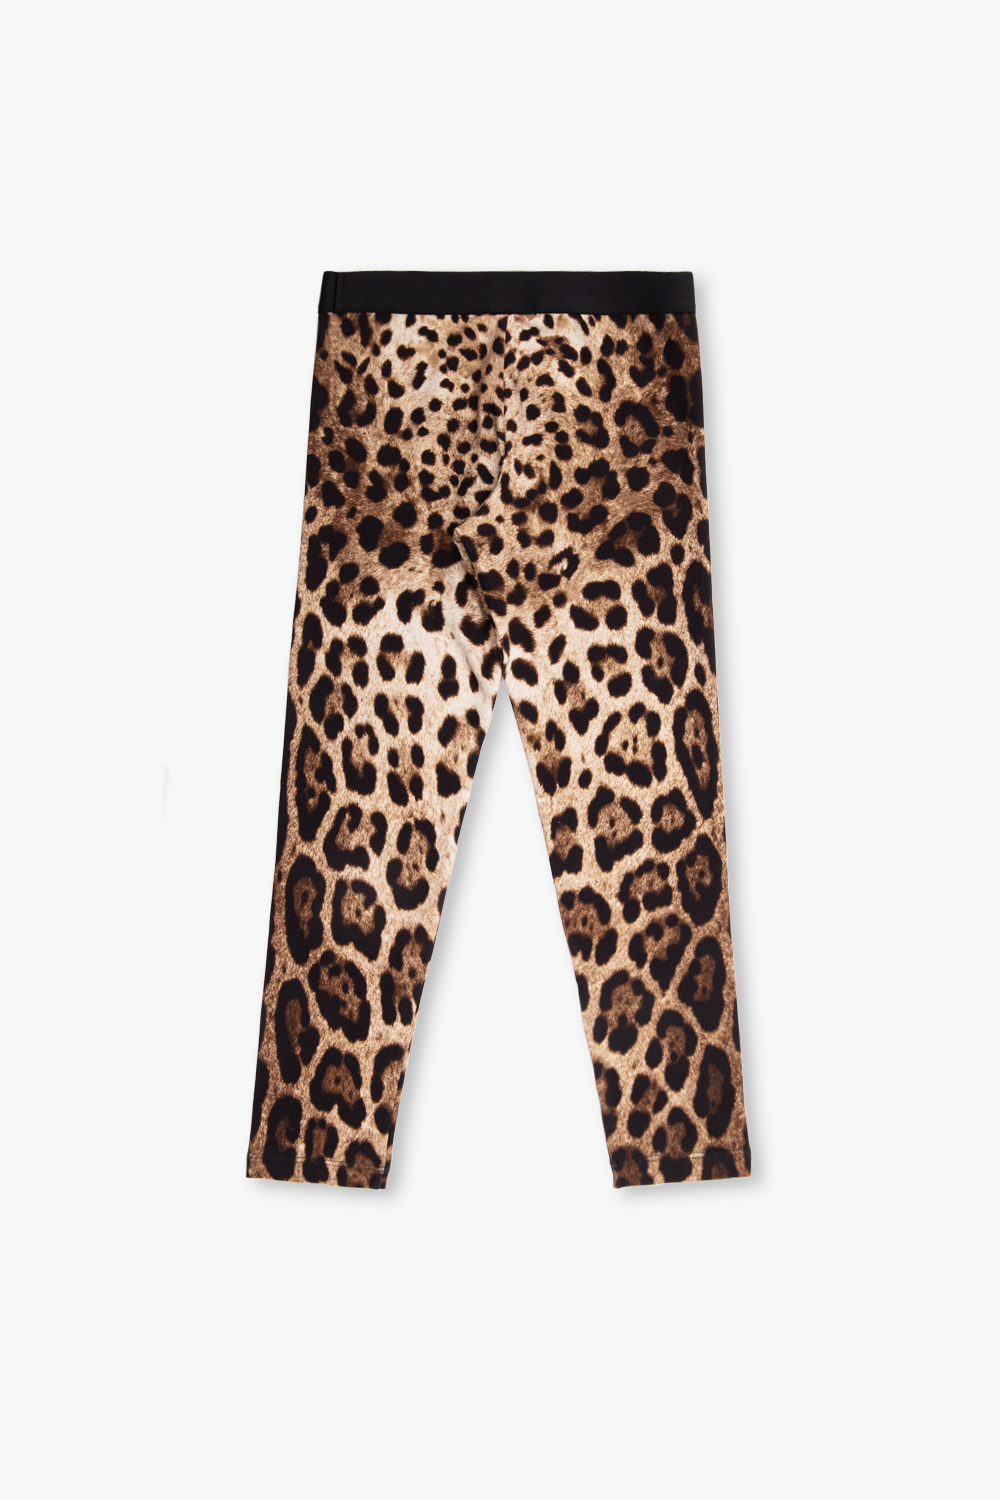 Dolce & Gabbana Women Iphone 6 6s Plate Case Animal print leggings